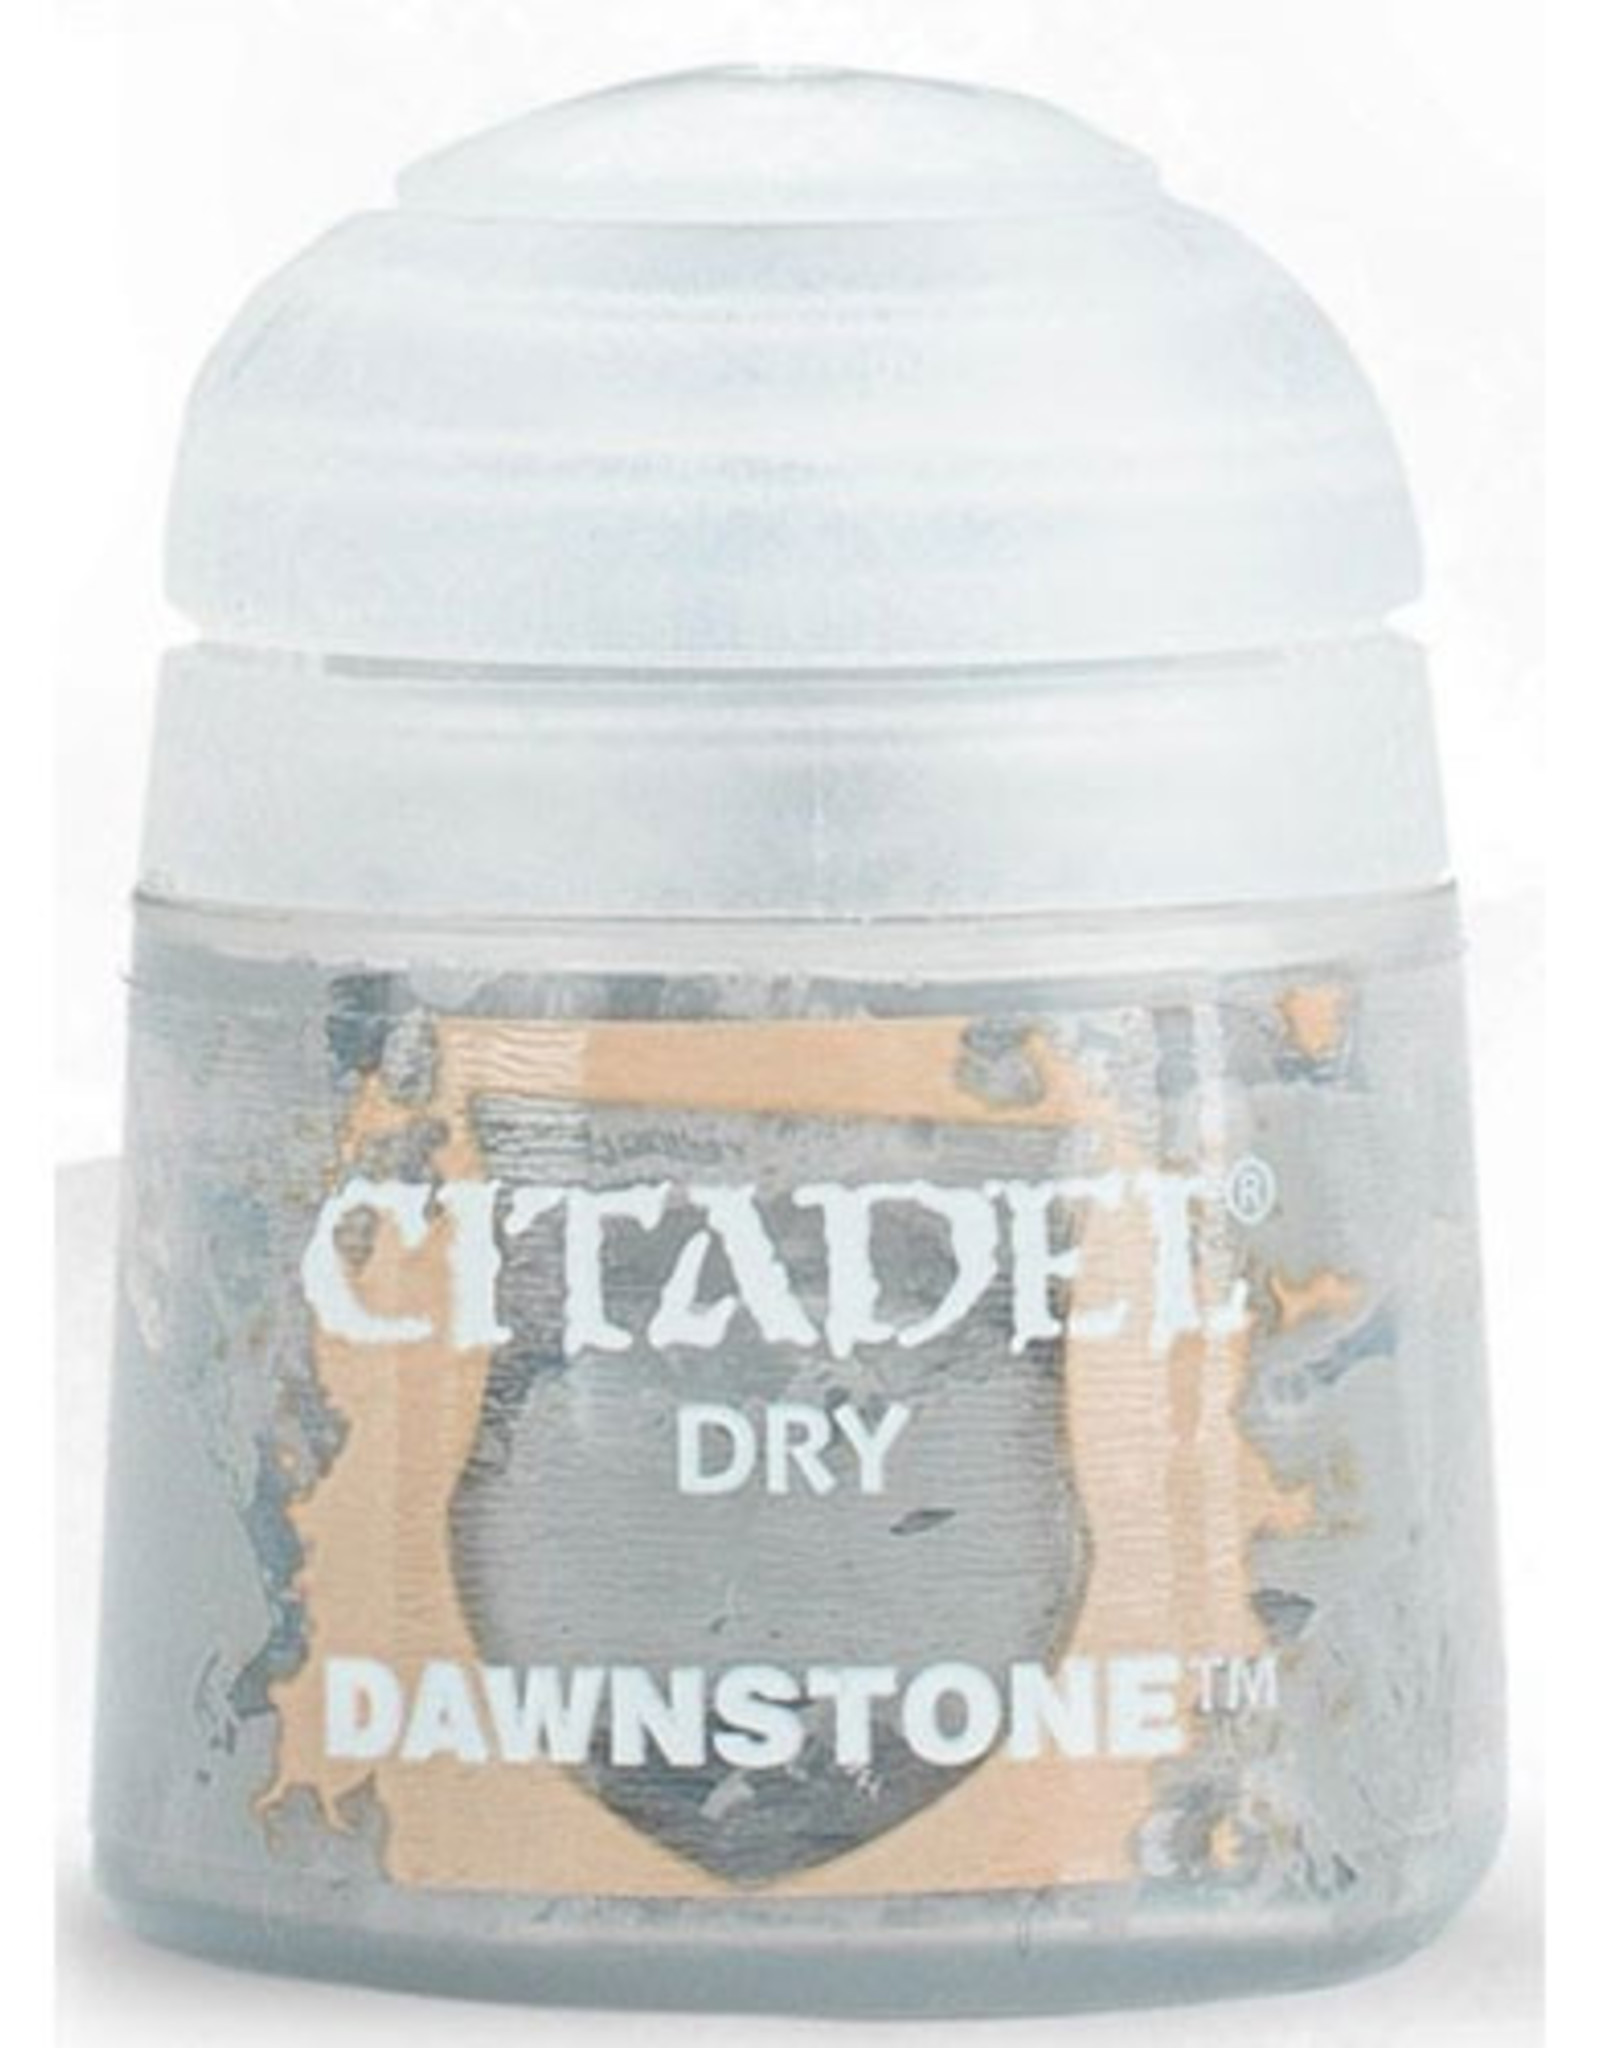 Games Workshop Citadel Dry: Dawnstone